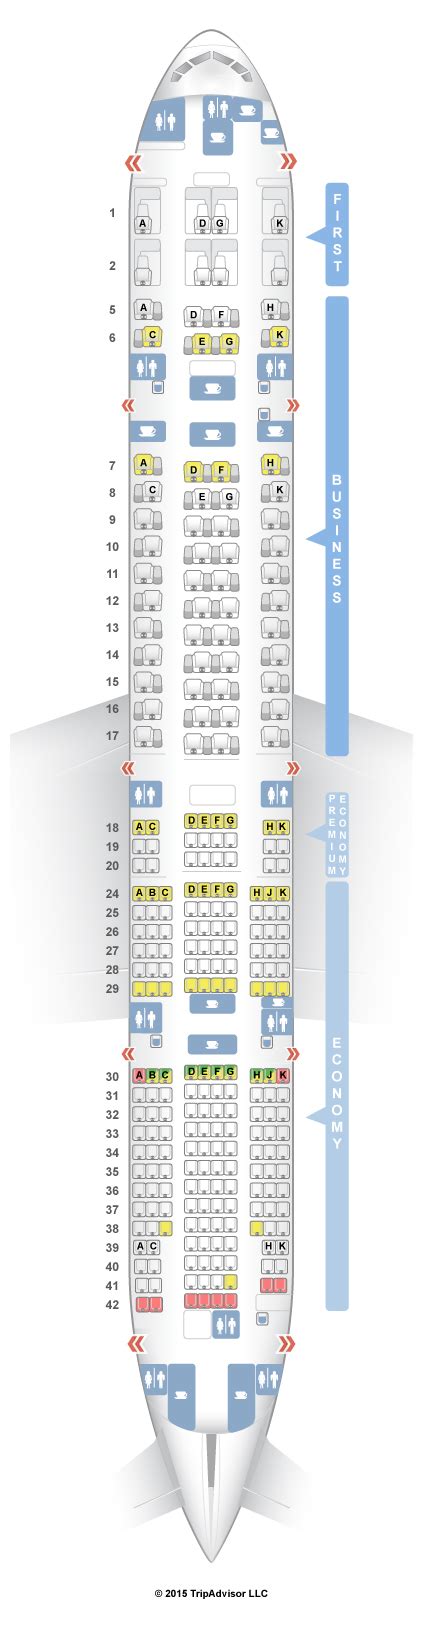 Seatguru Seat Map Ana Boeing Er W V